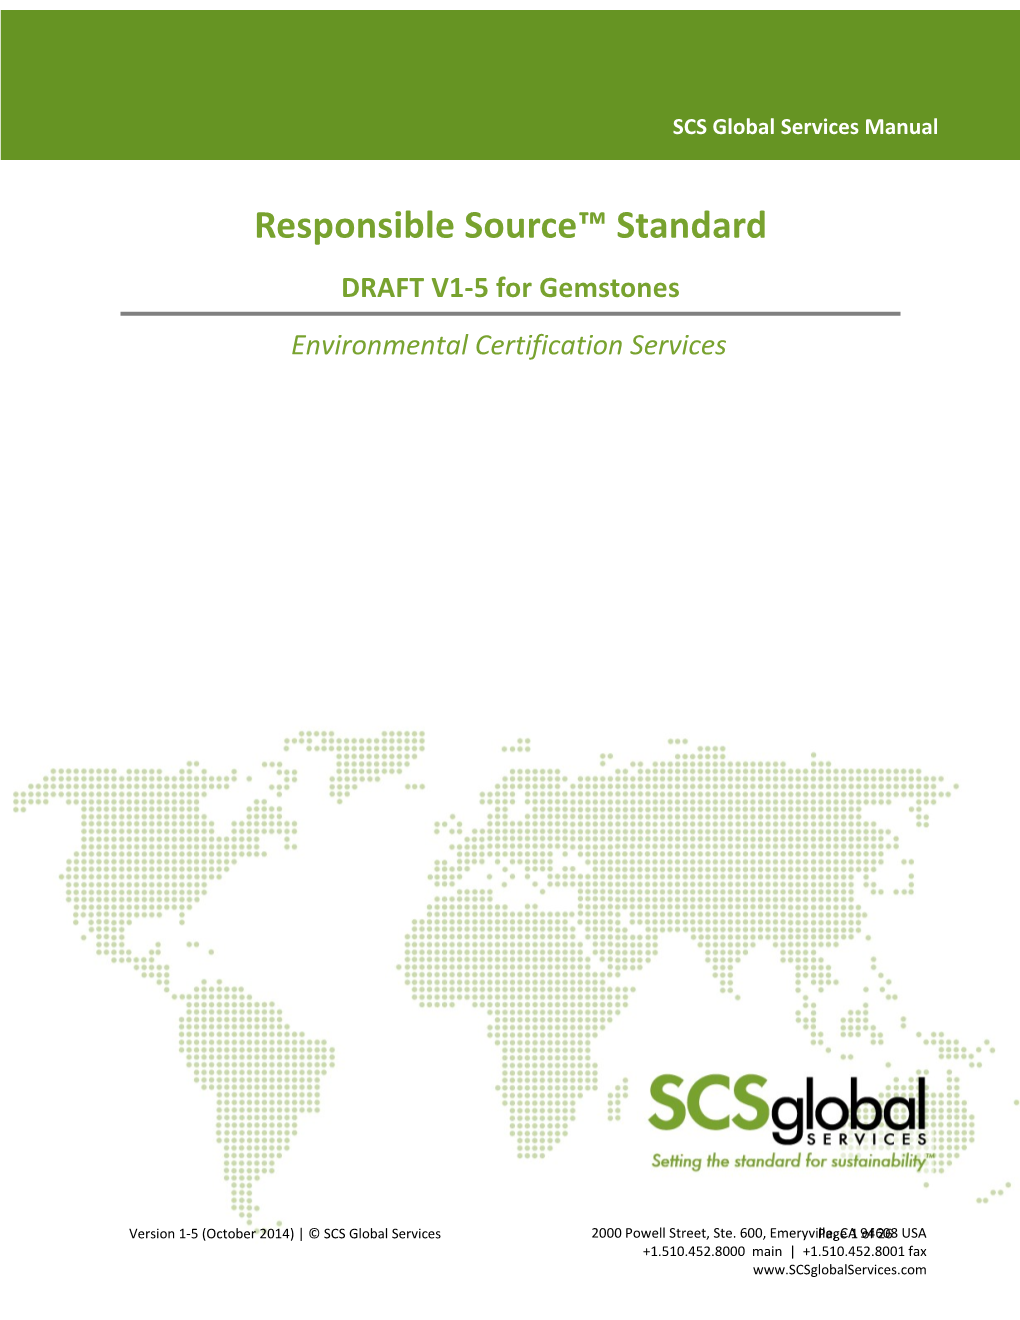 Responsible Source Standard